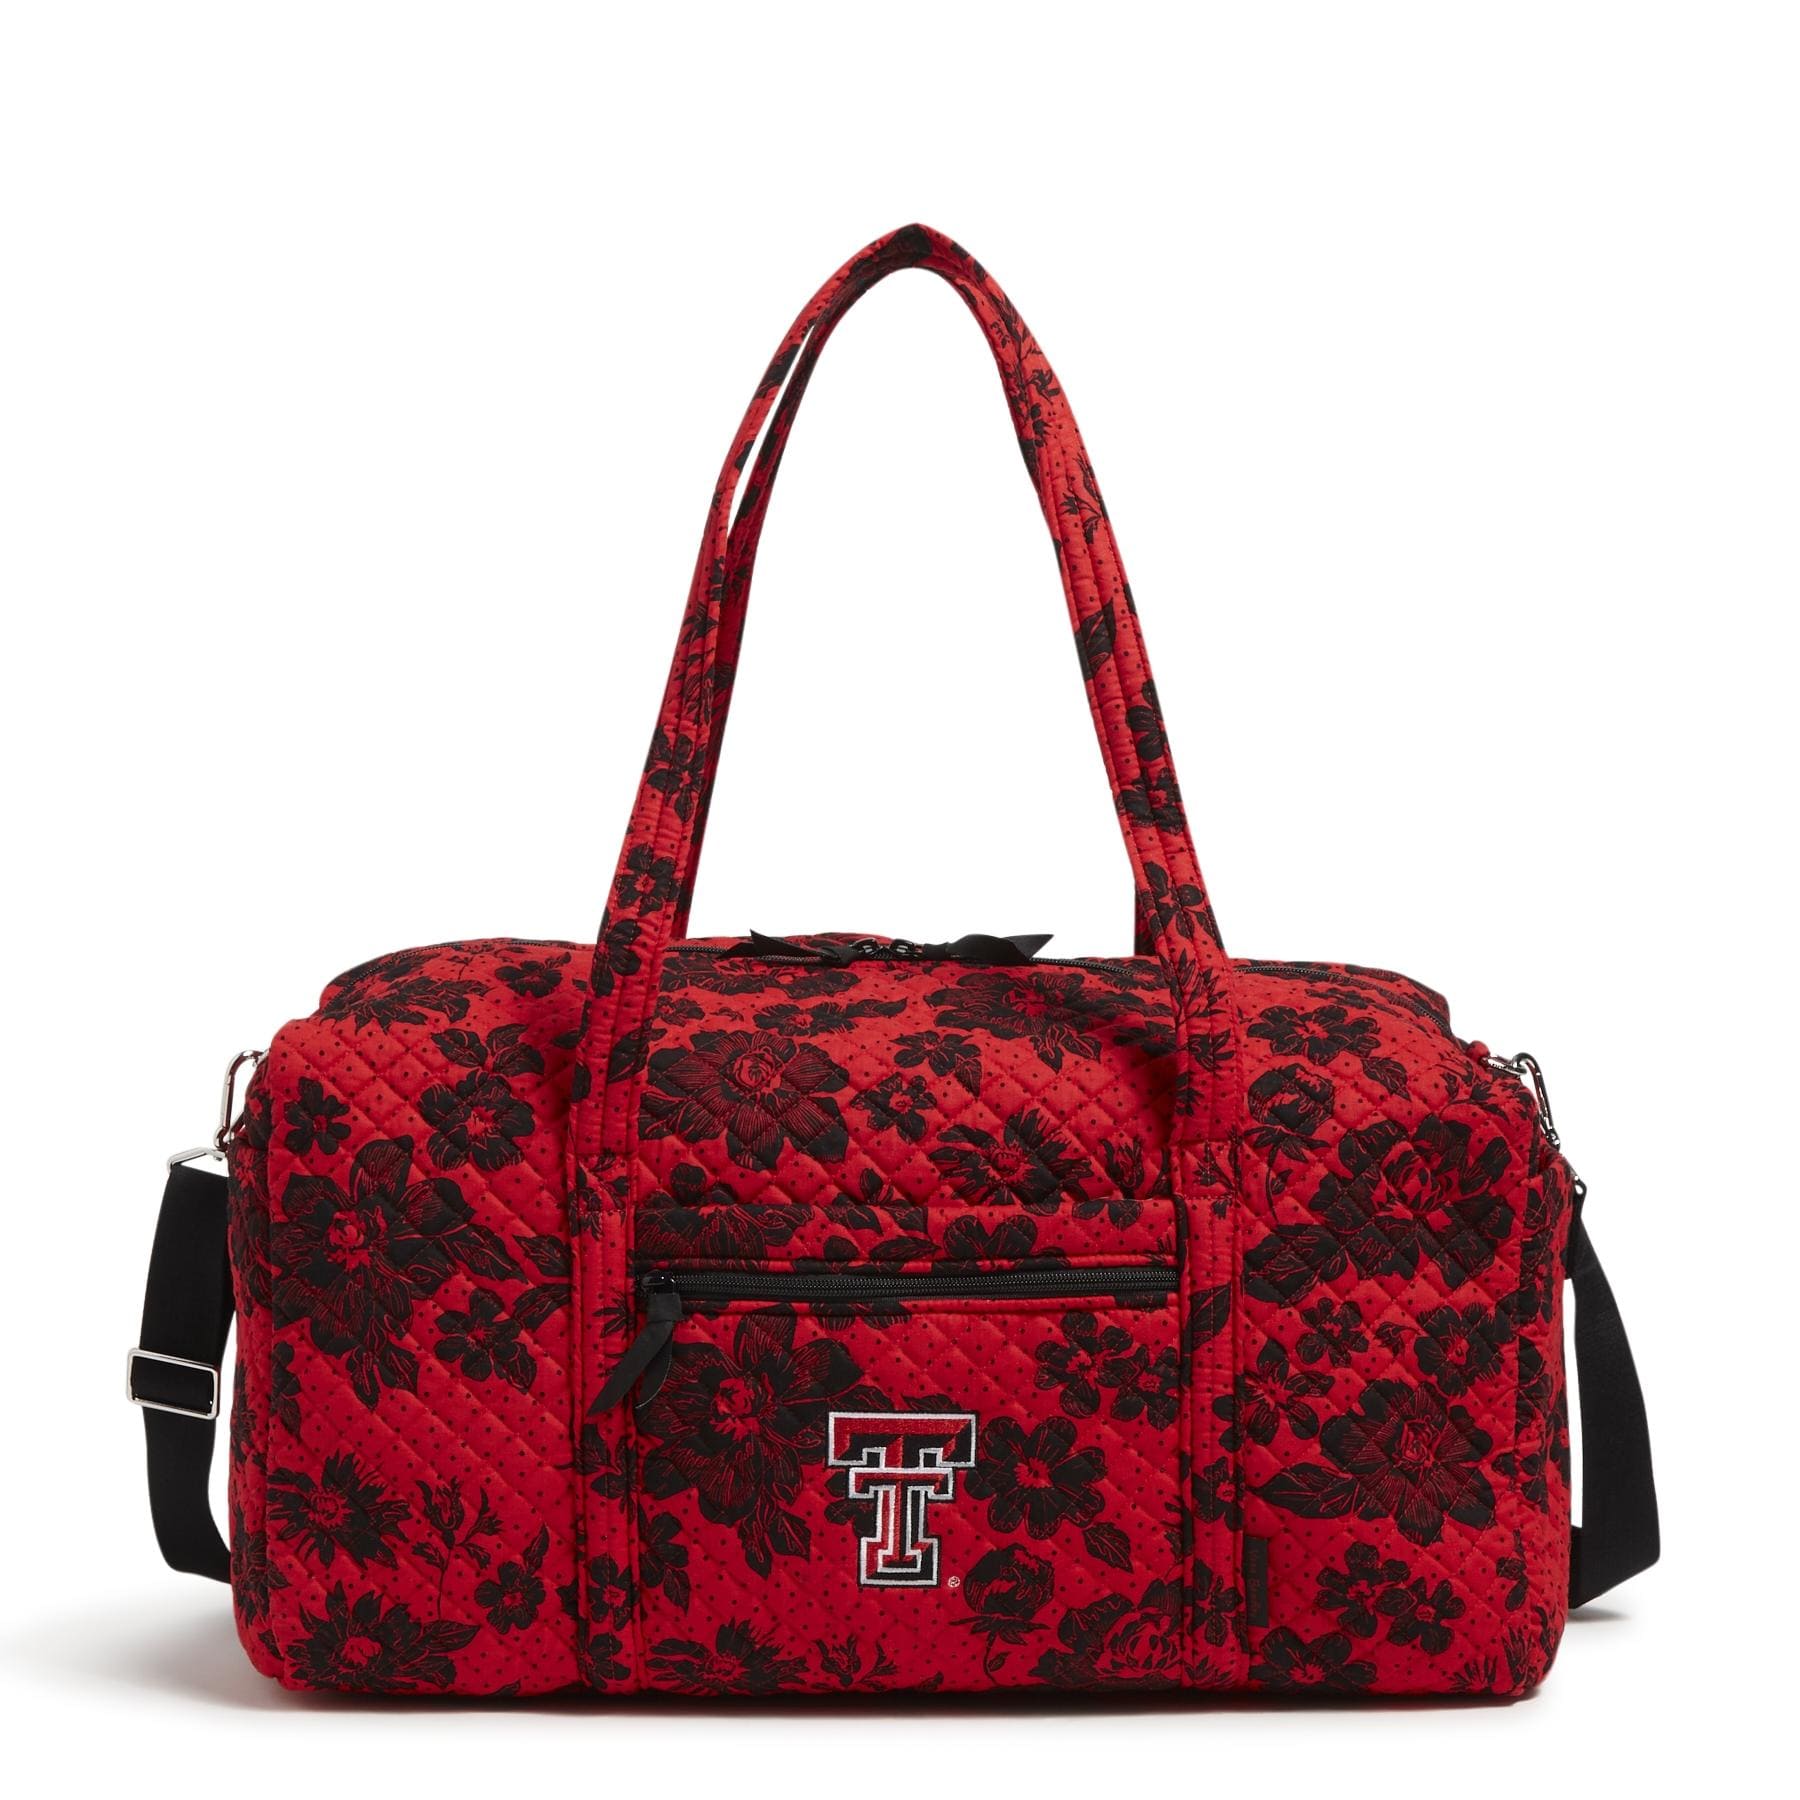 Collegiate Large Travel Duffel Bag-Red/Black Rain Garden with Texas Tech University Logo-Image 1-Vera Bradley